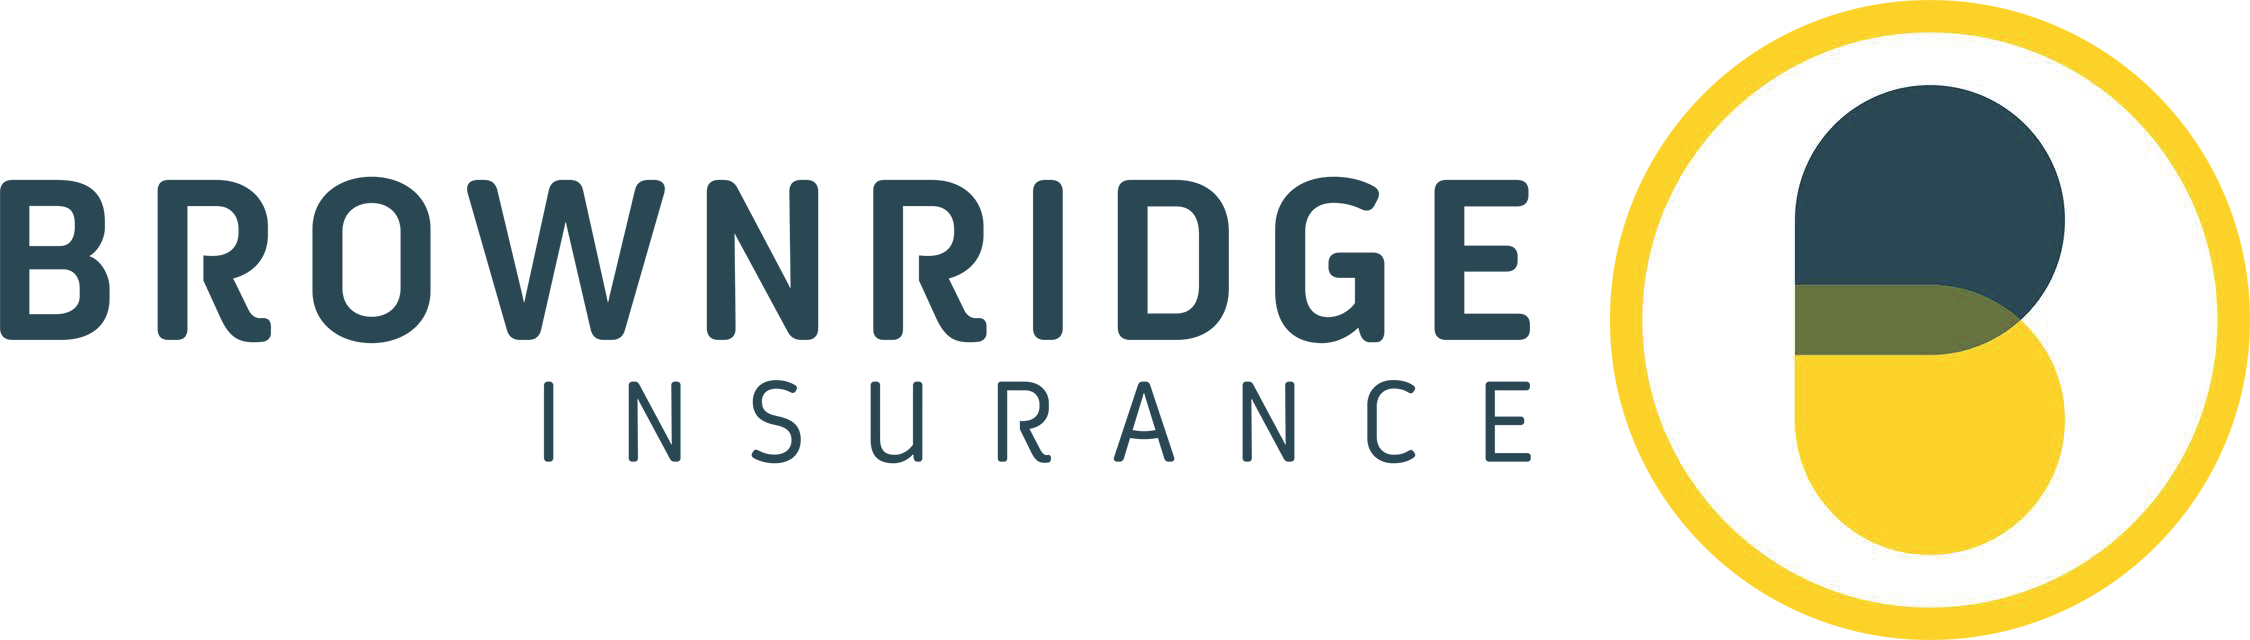 Brownridge Insurance